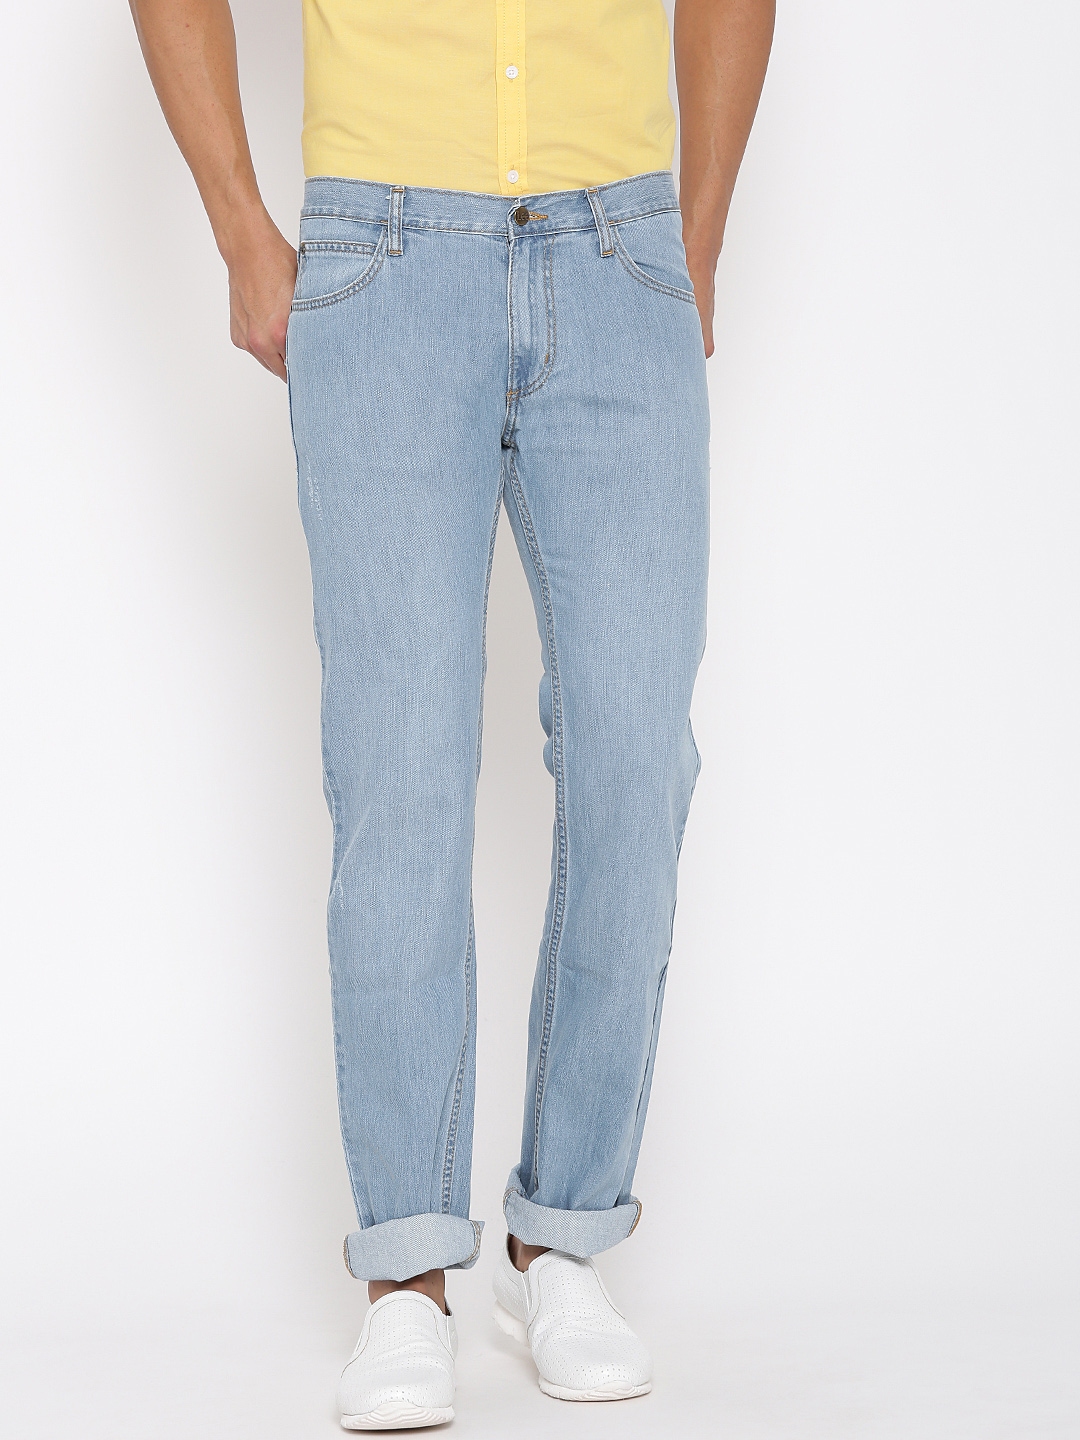 Buy Lee Blue Powell Slim Fit Jeans - Jeans for Men 1406845 | Myntra